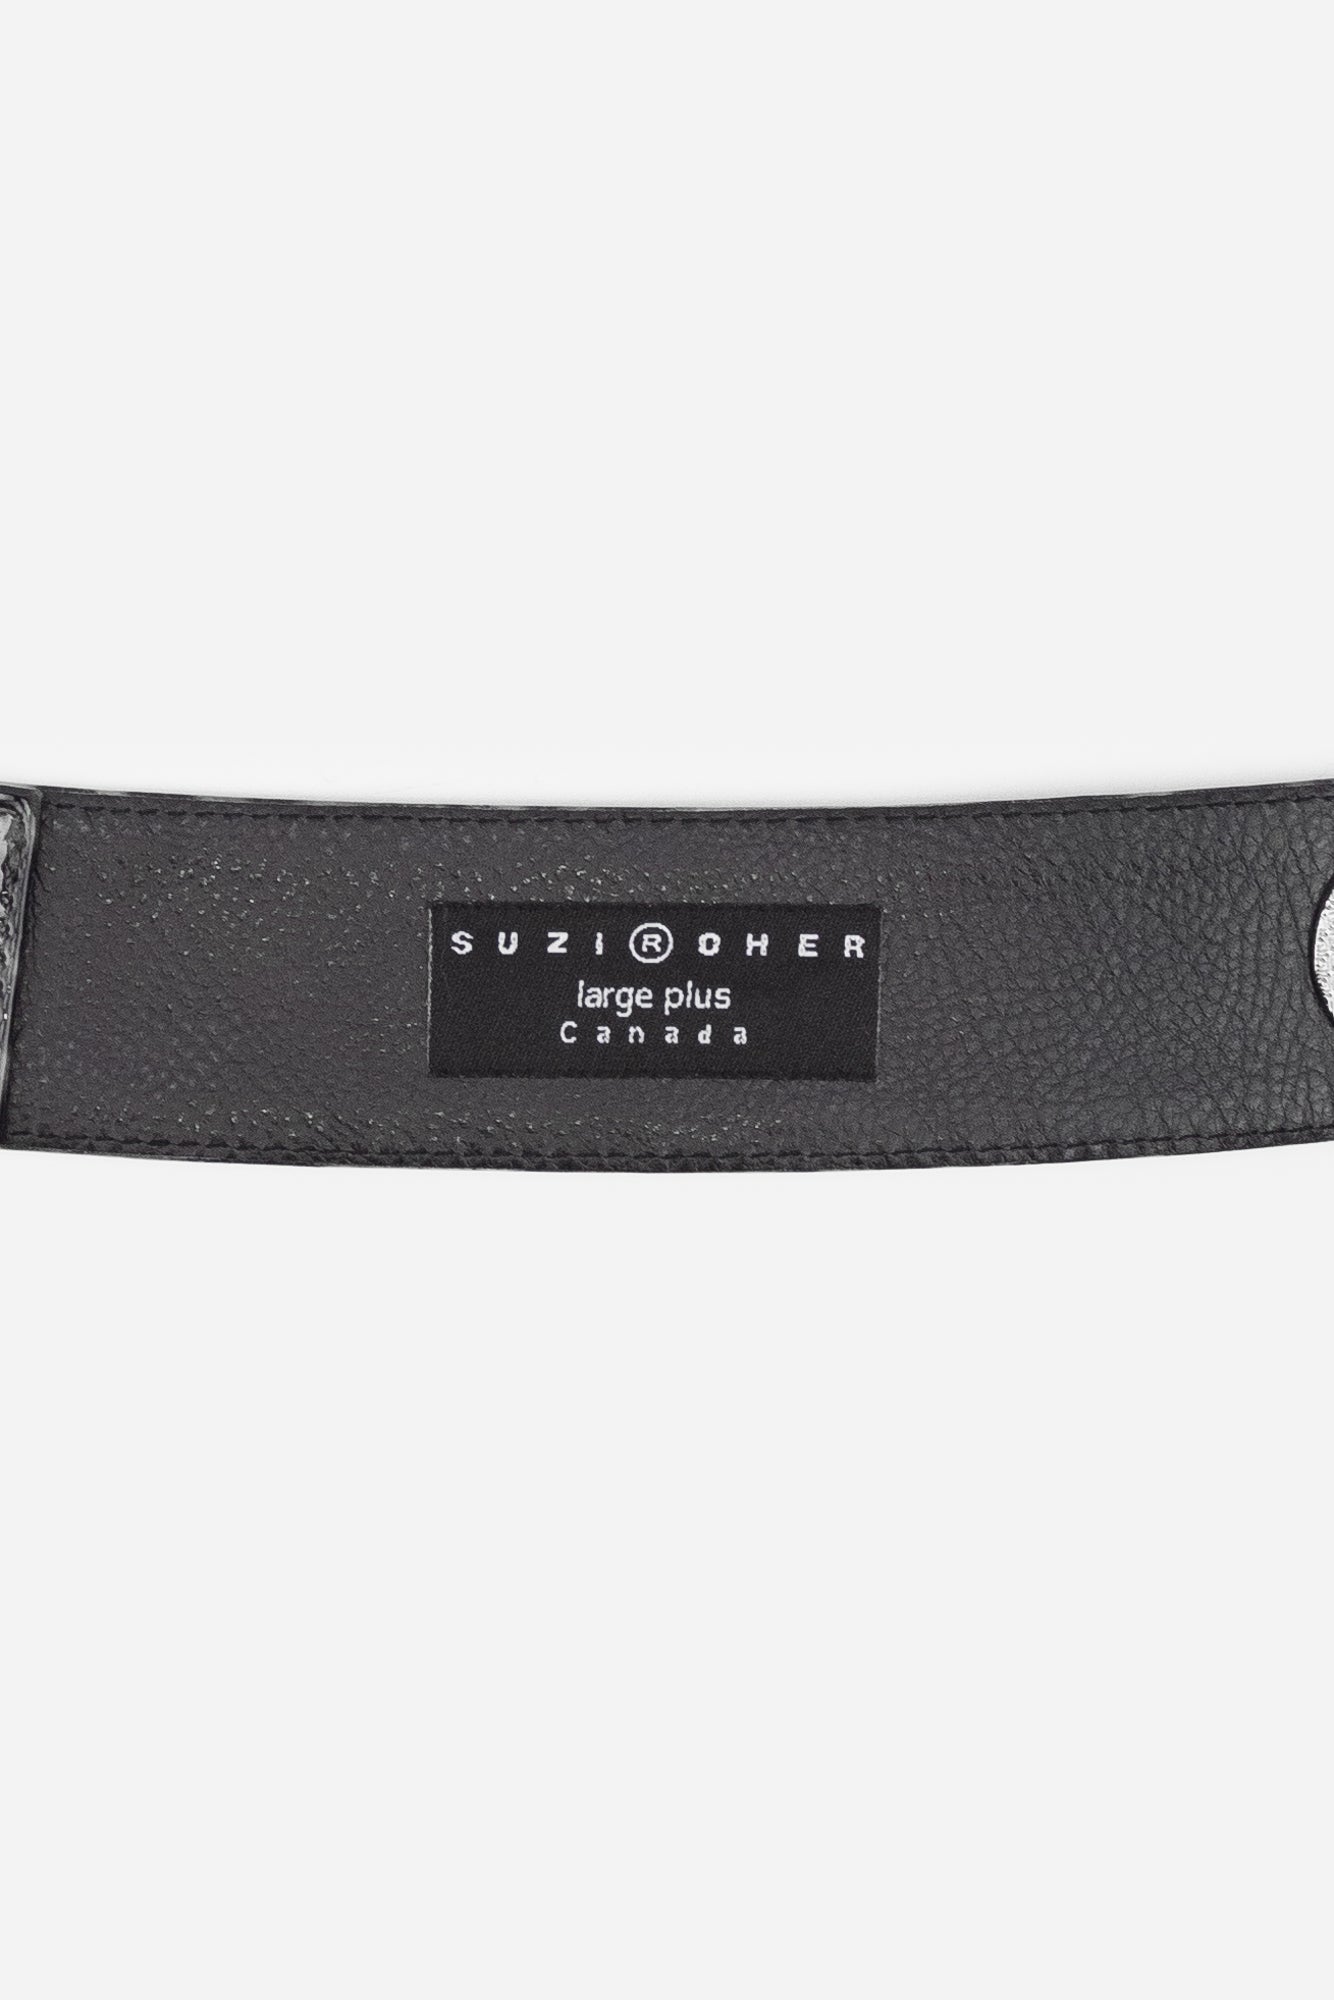 Grey Leopard Print Patent Leather Adjustable Belt